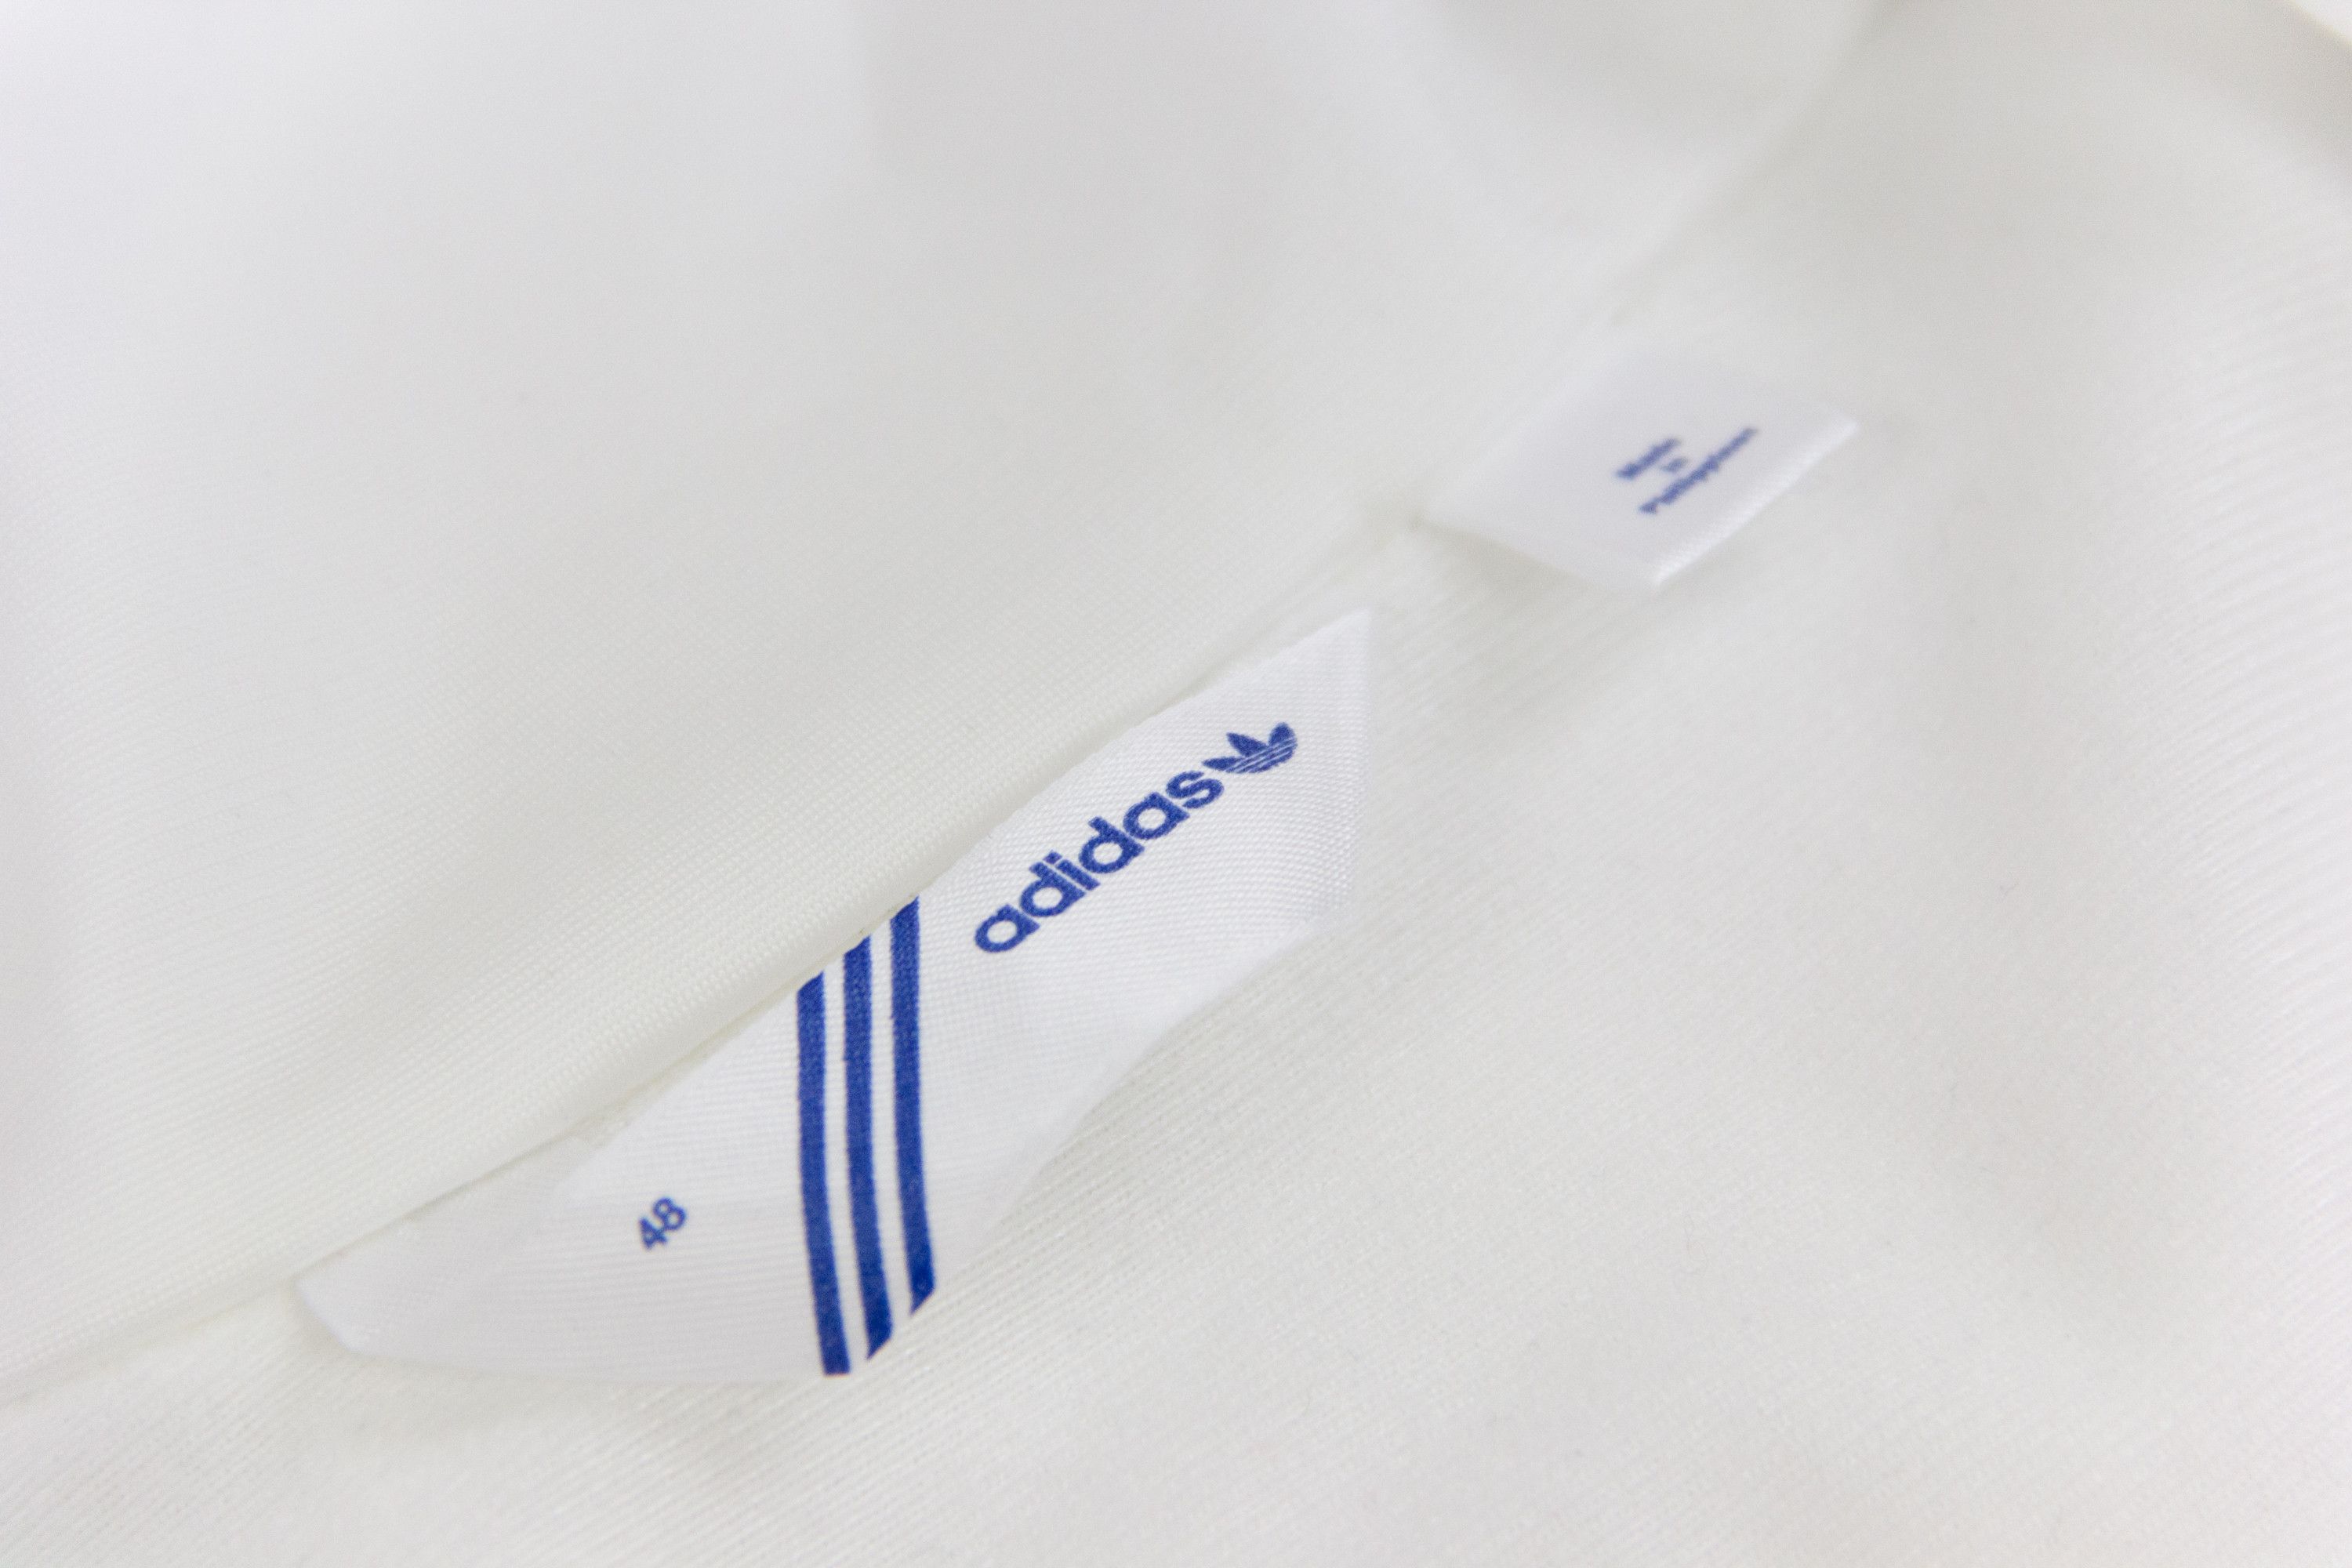 Adidas Adidas Originals White Track Jacket with Silver Stripes, Size M Size US M / EU 48-50 / 2 - 9 Thumbnail